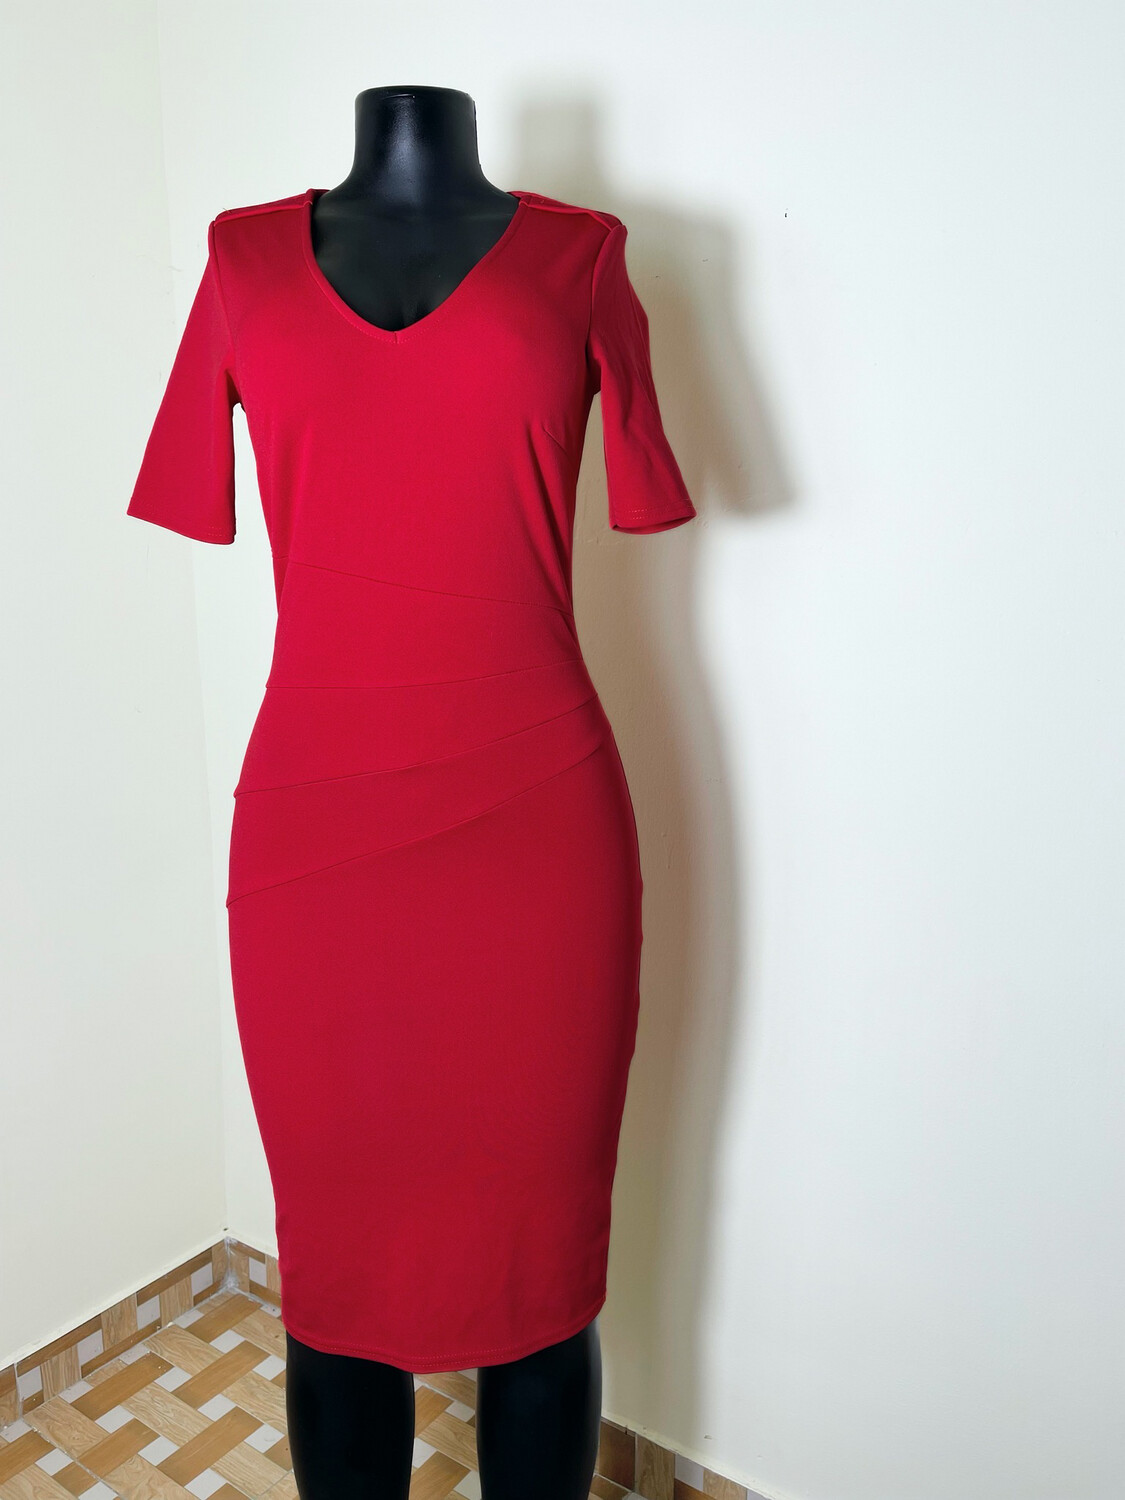 Red Bodycon Dress - Uk 8